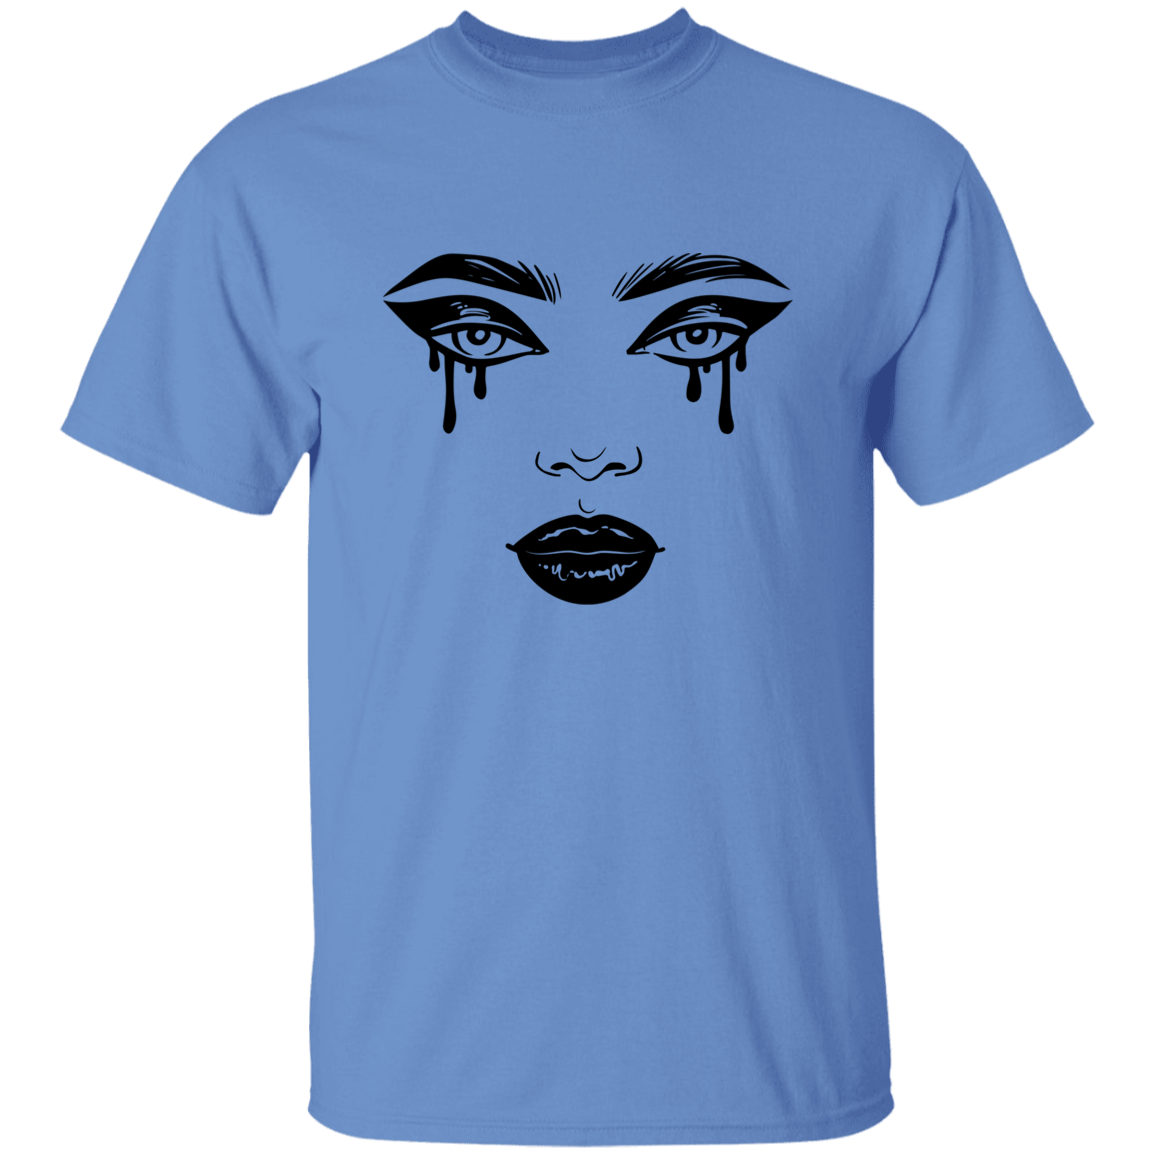 Crying Lady 5.3 oz. T-Shirt